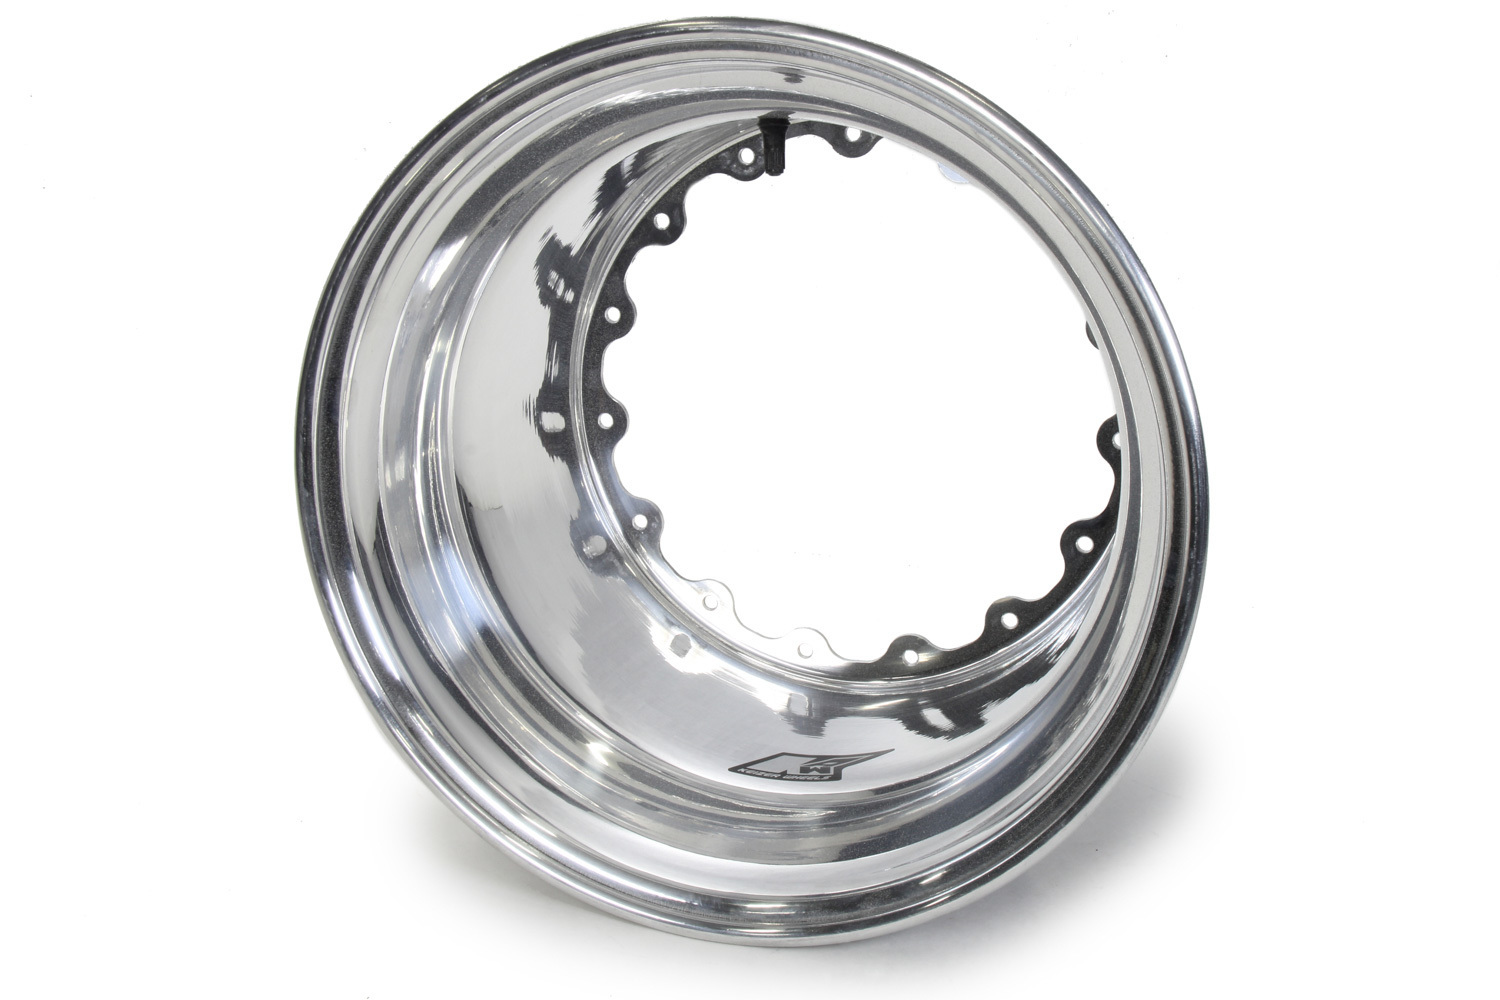 Keizer Aluminum Wheels W159 Wheel Shell, Matrix Modular, Outer, 15 x 9.00 in, Aluminum, Polished, Keizer Wide 5, Each